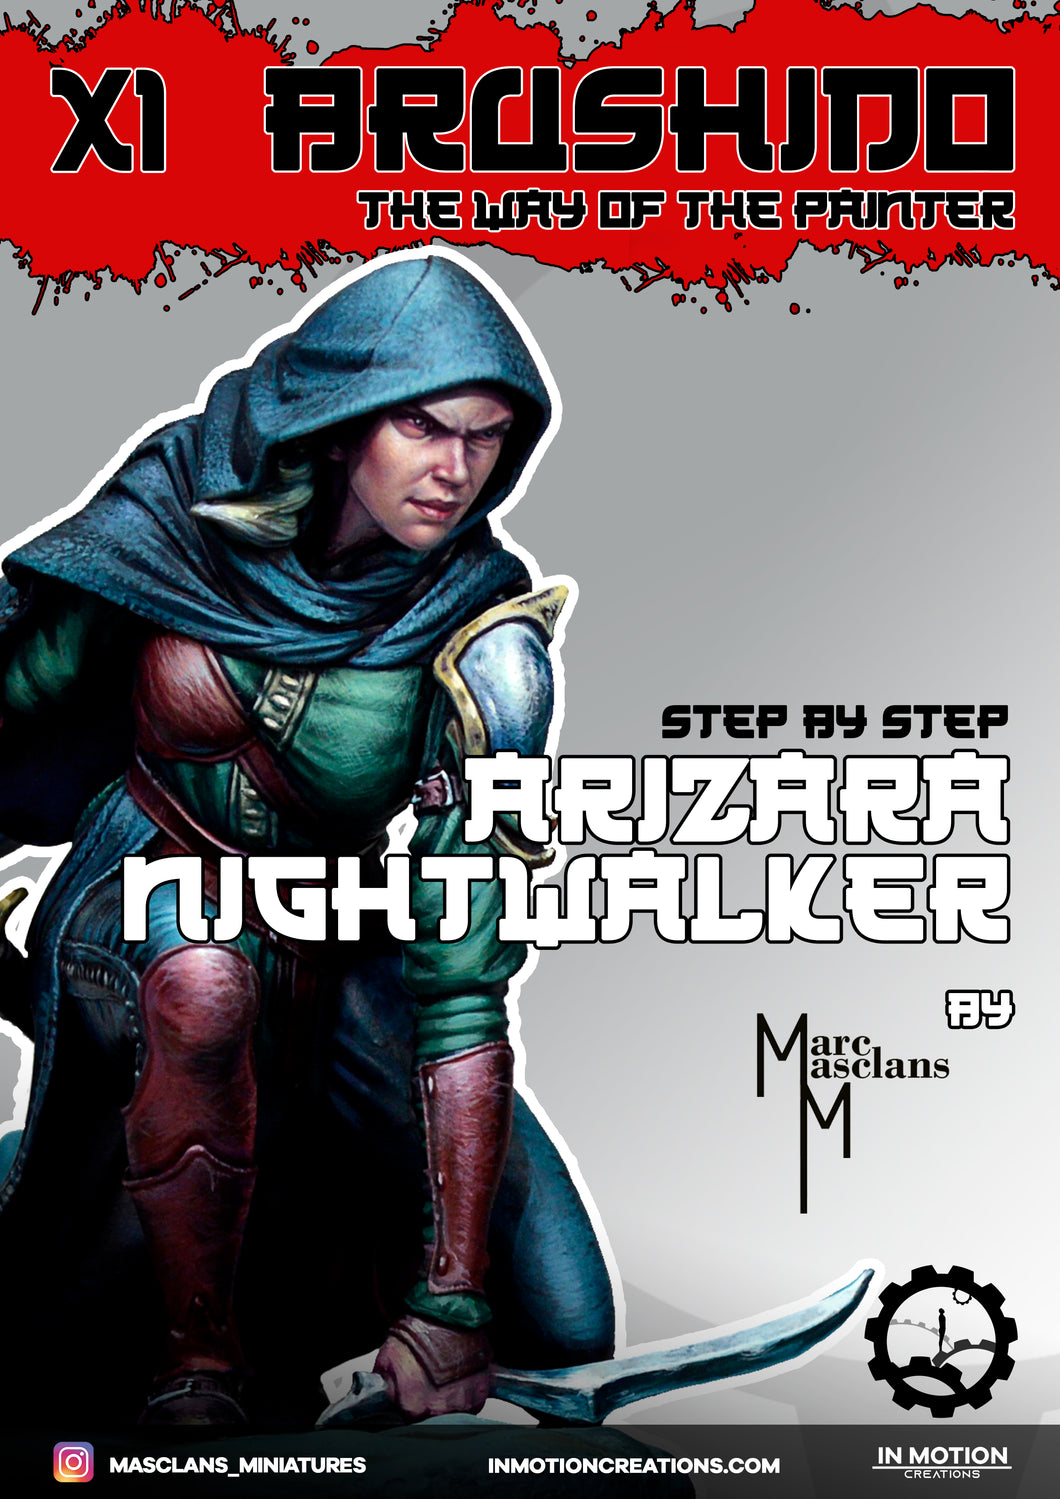 Brushido X1 - Especial Arizara Nightwalker, por Marc Masclans